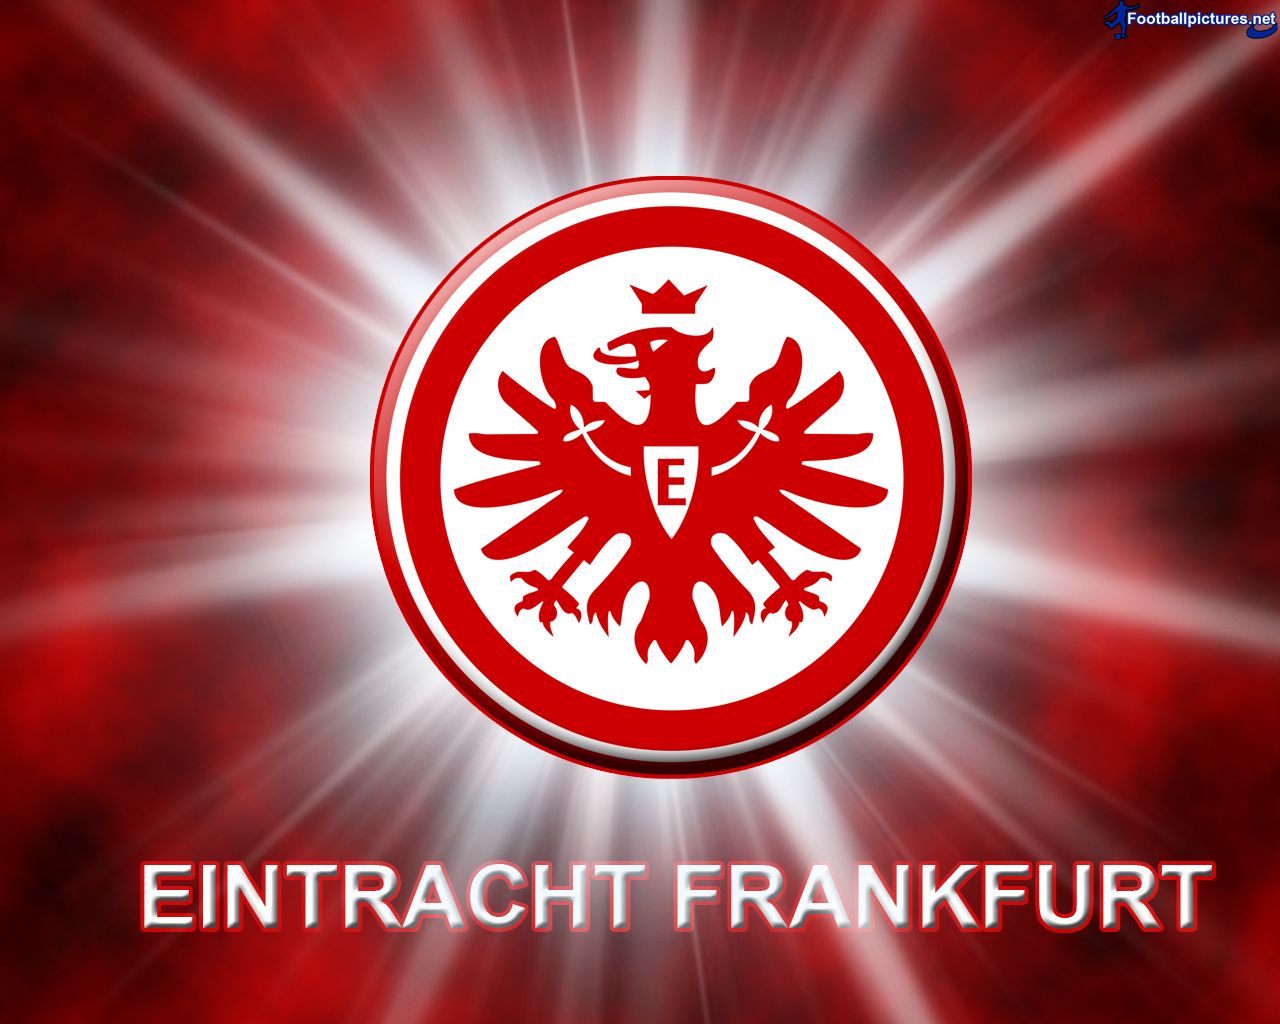 eintracht frankfurt wallpaper,red,logo,flag,emblem,font